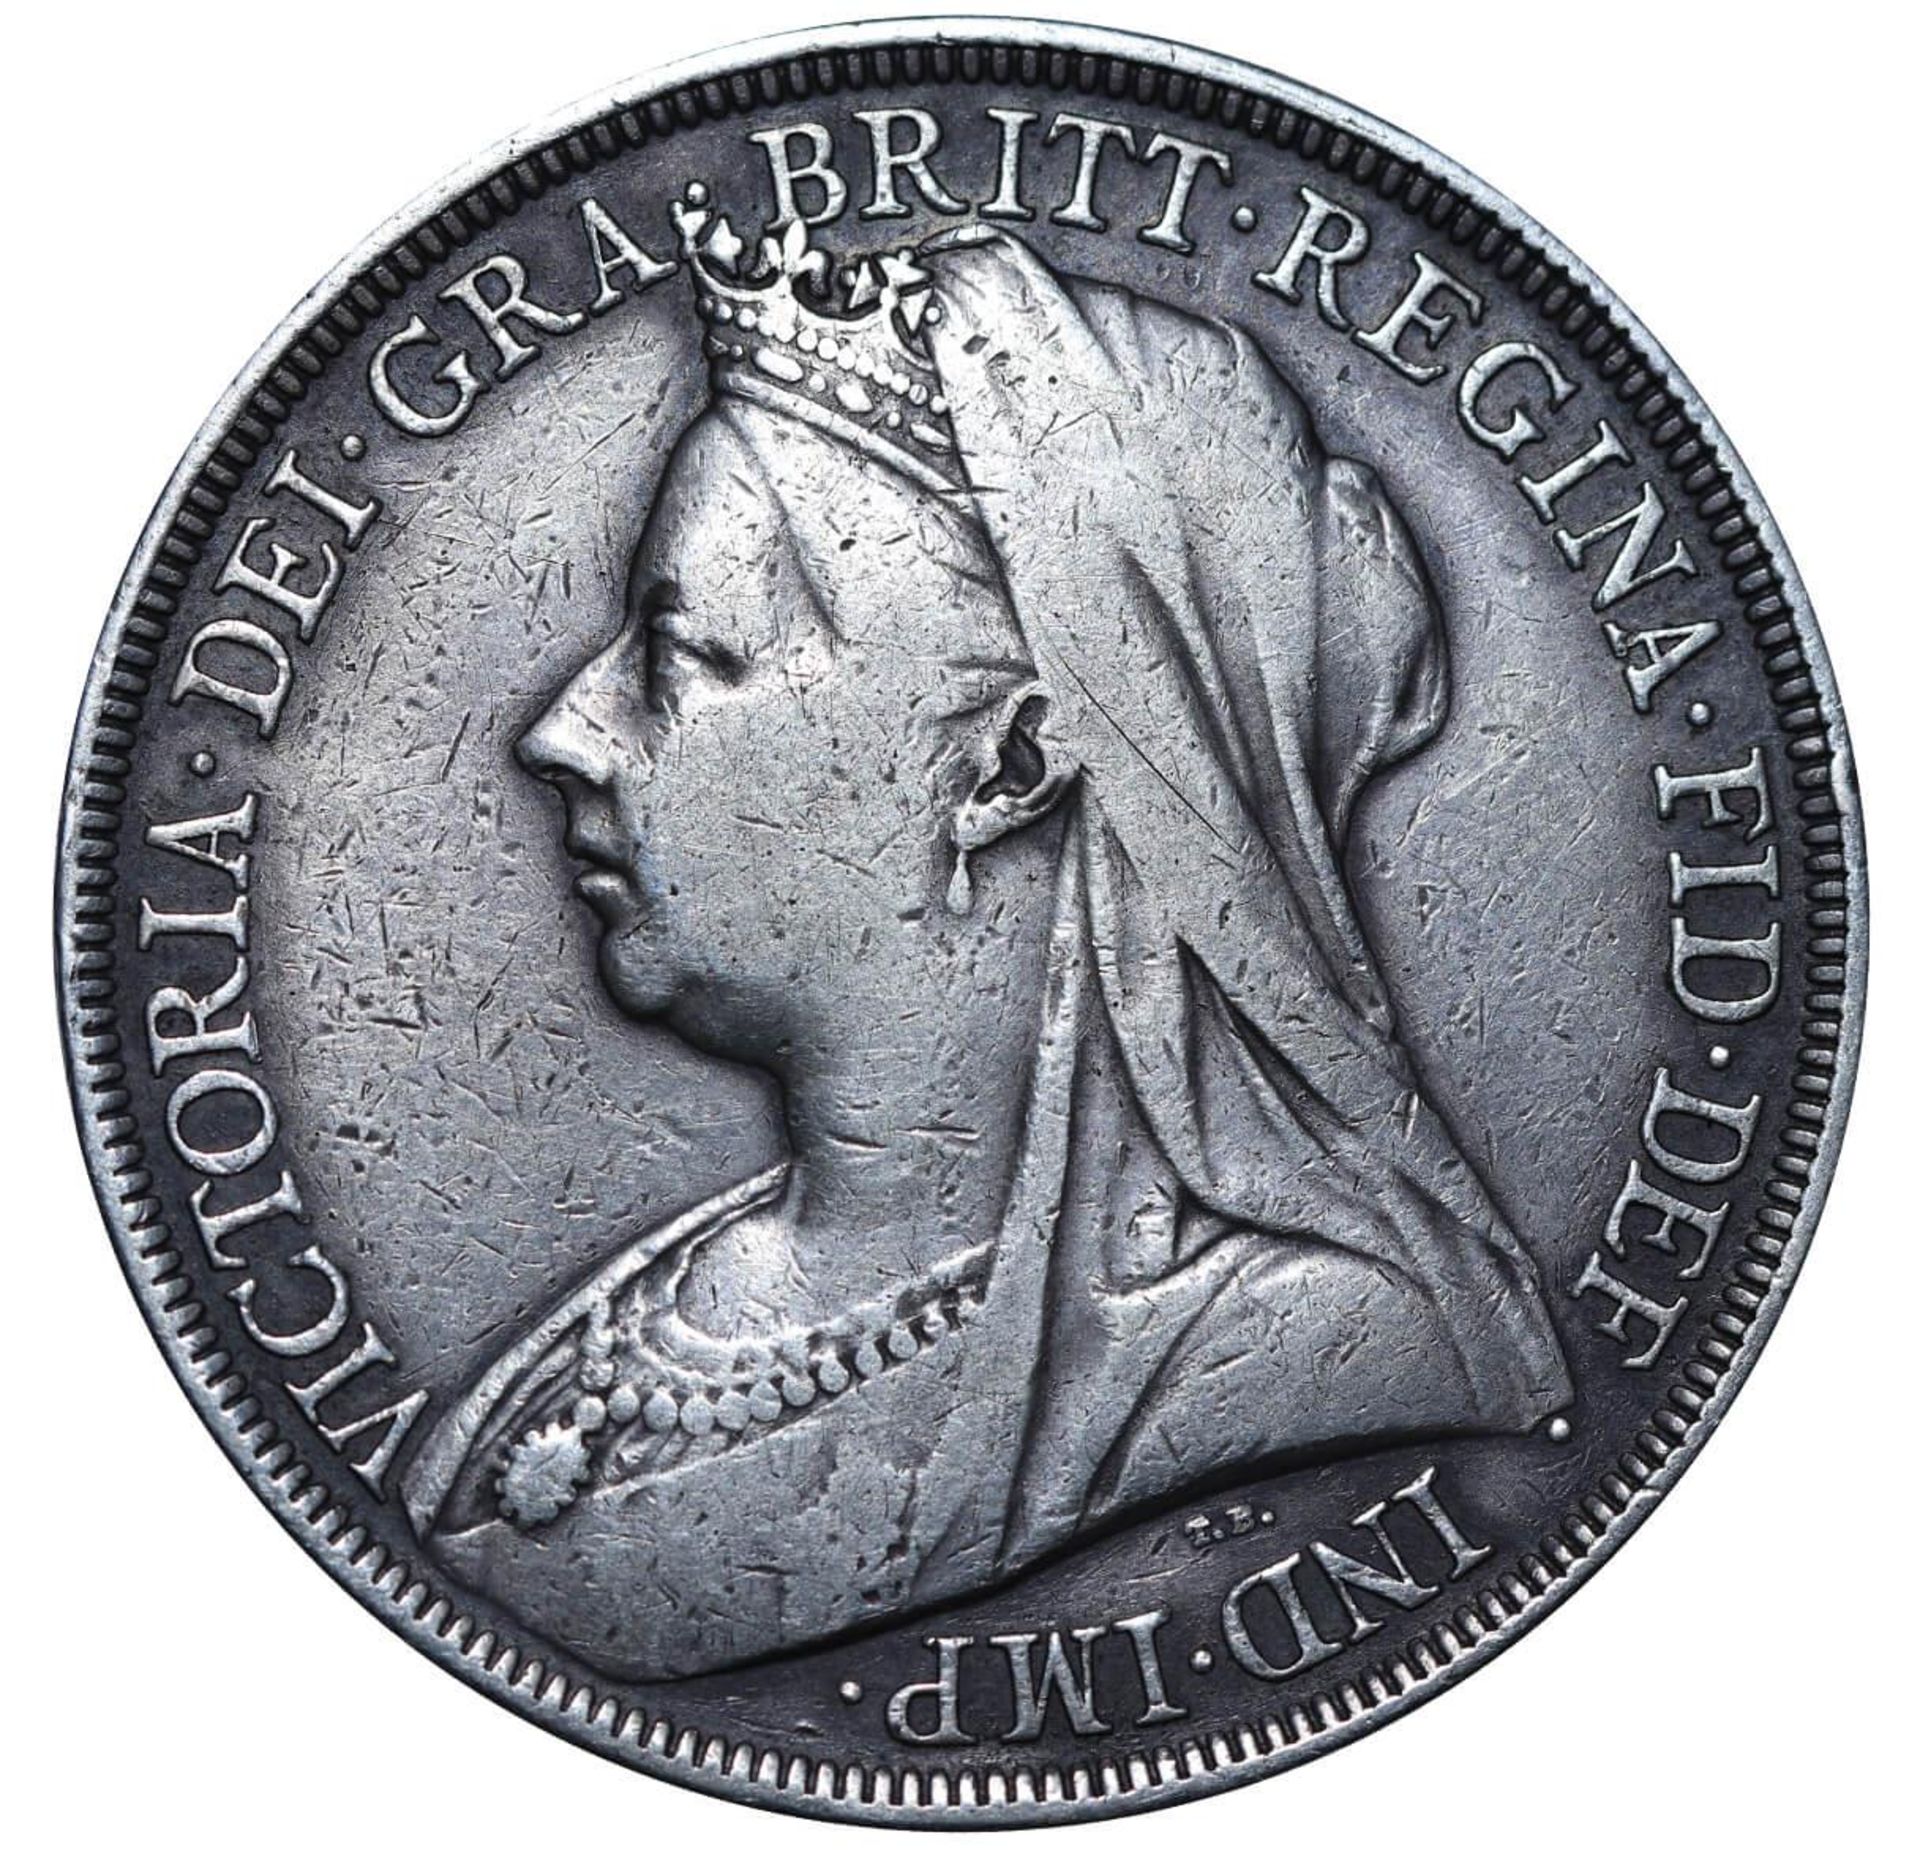 United Kingdom, 1 Crown, 1896 year - Image 2 of 3